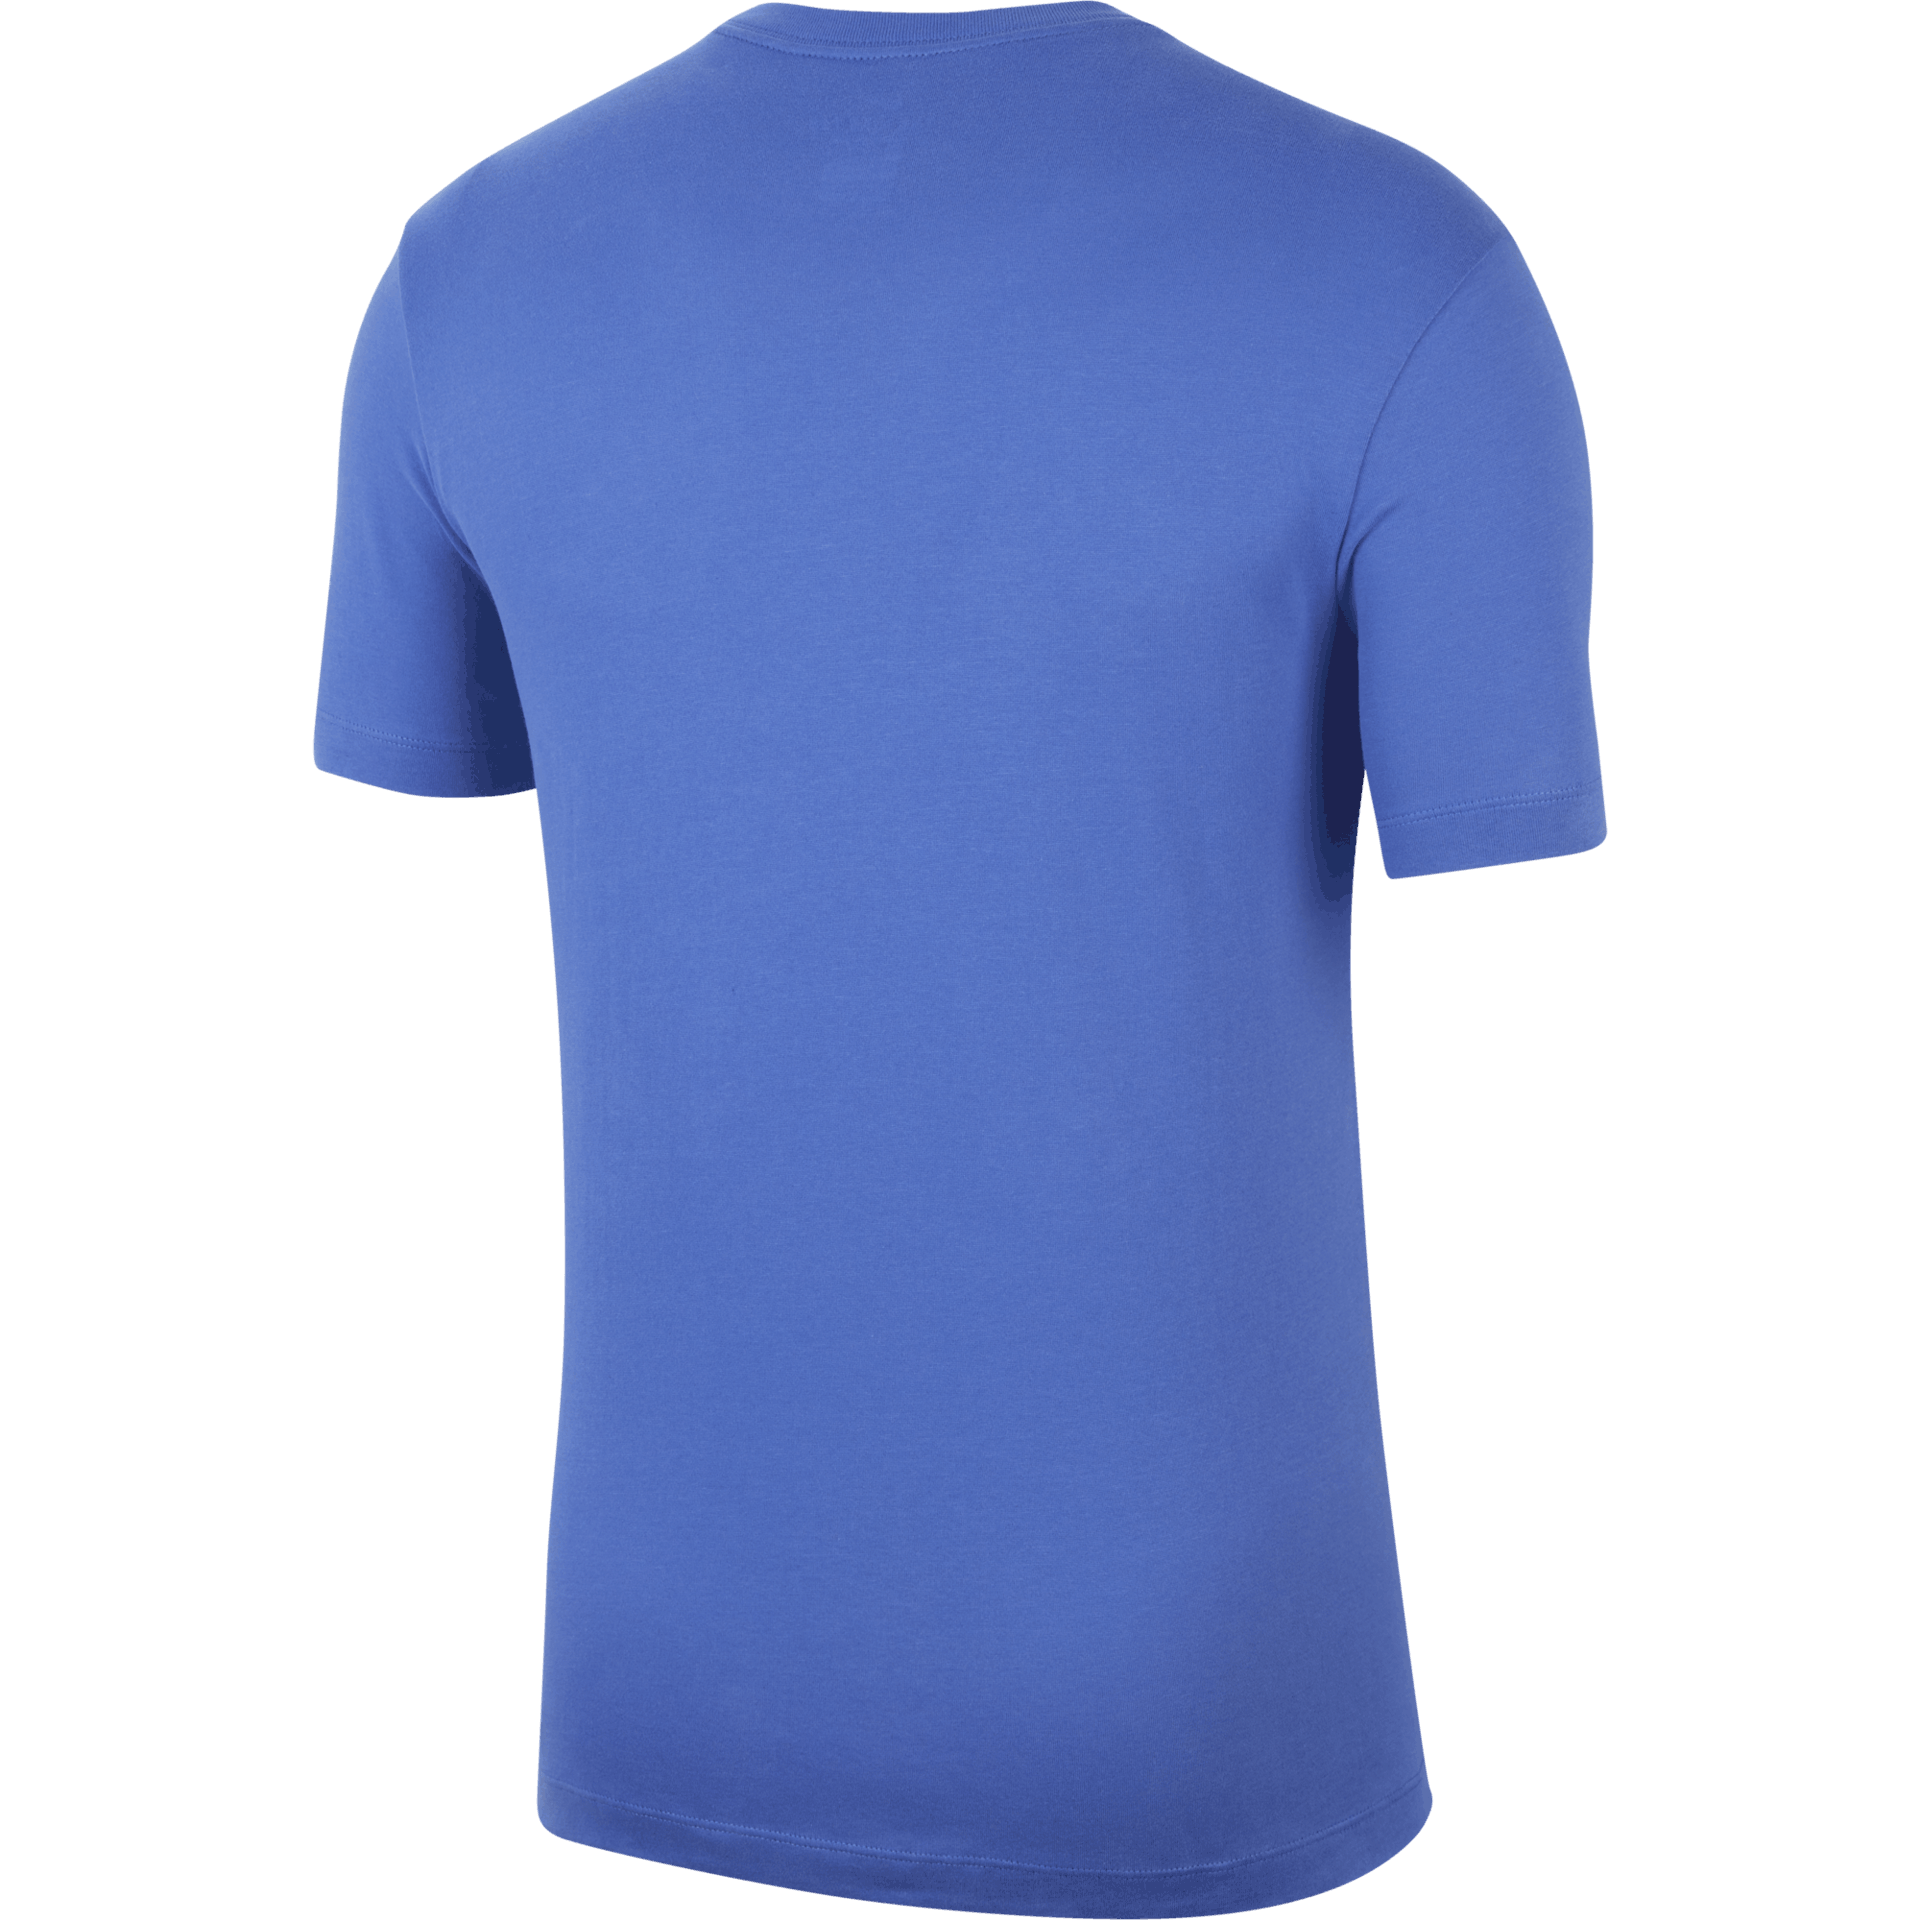 Nike Dri-FIT Men's Training T-Shirt - Asport